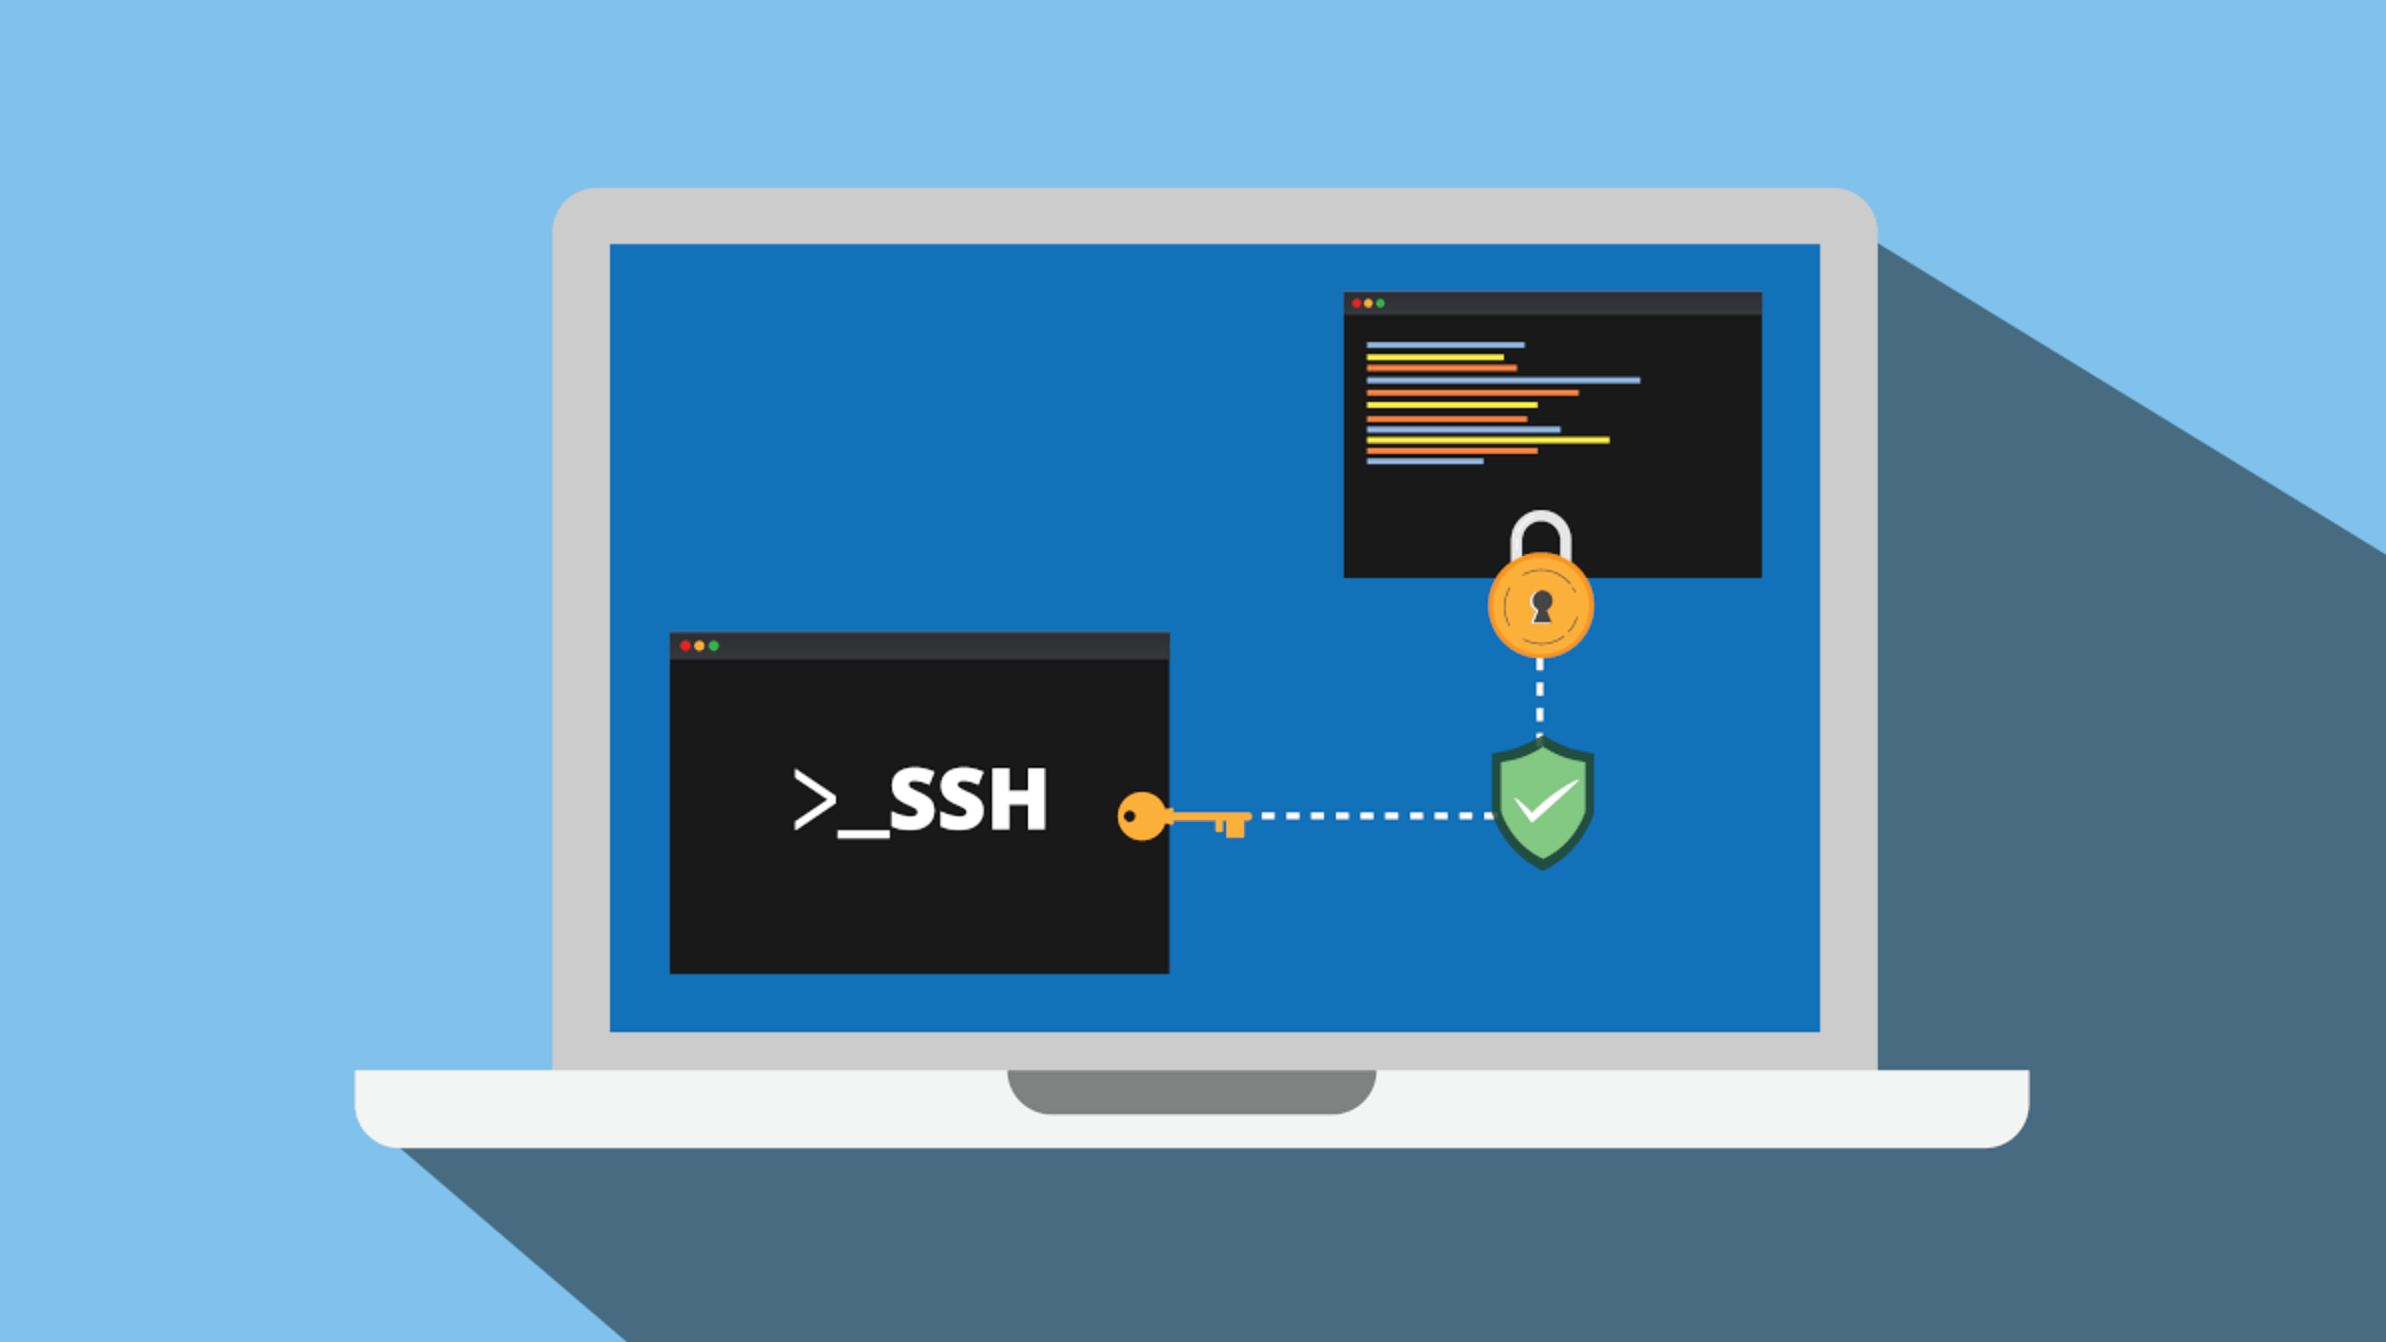 vscode ssh 免密登录 不需要输入登录密码